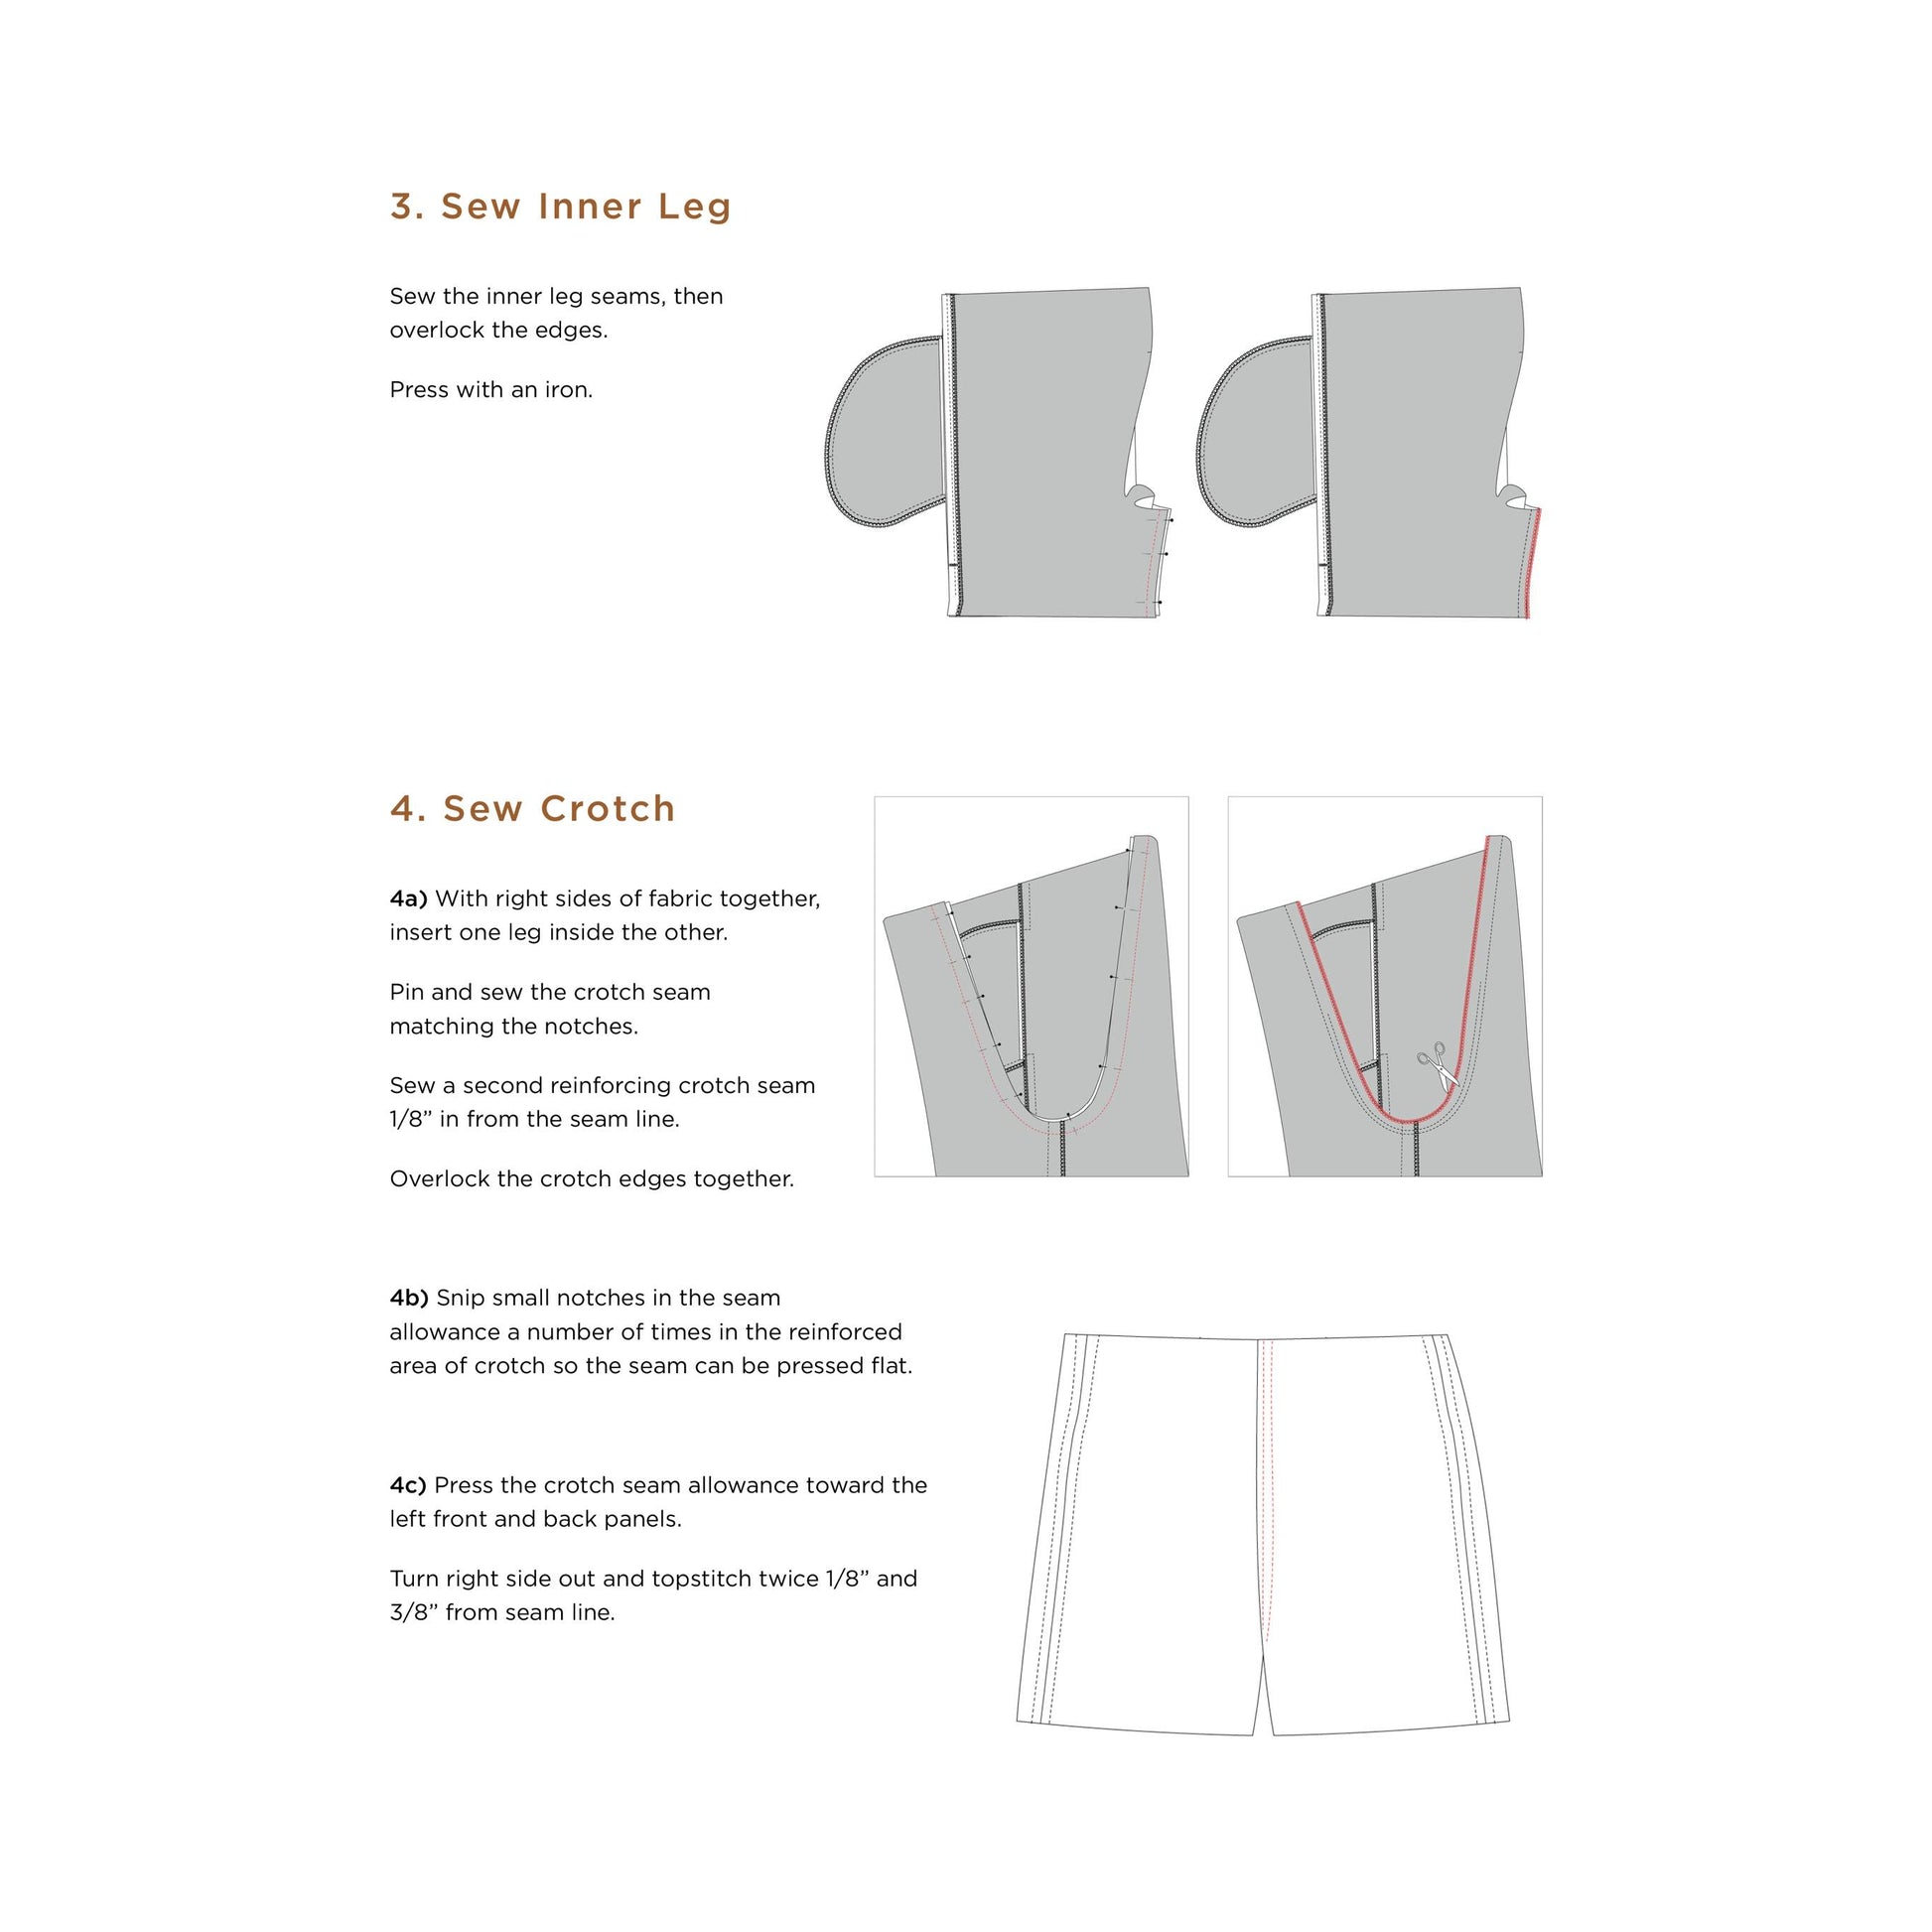 Men's Boxer shorts sewing pattern